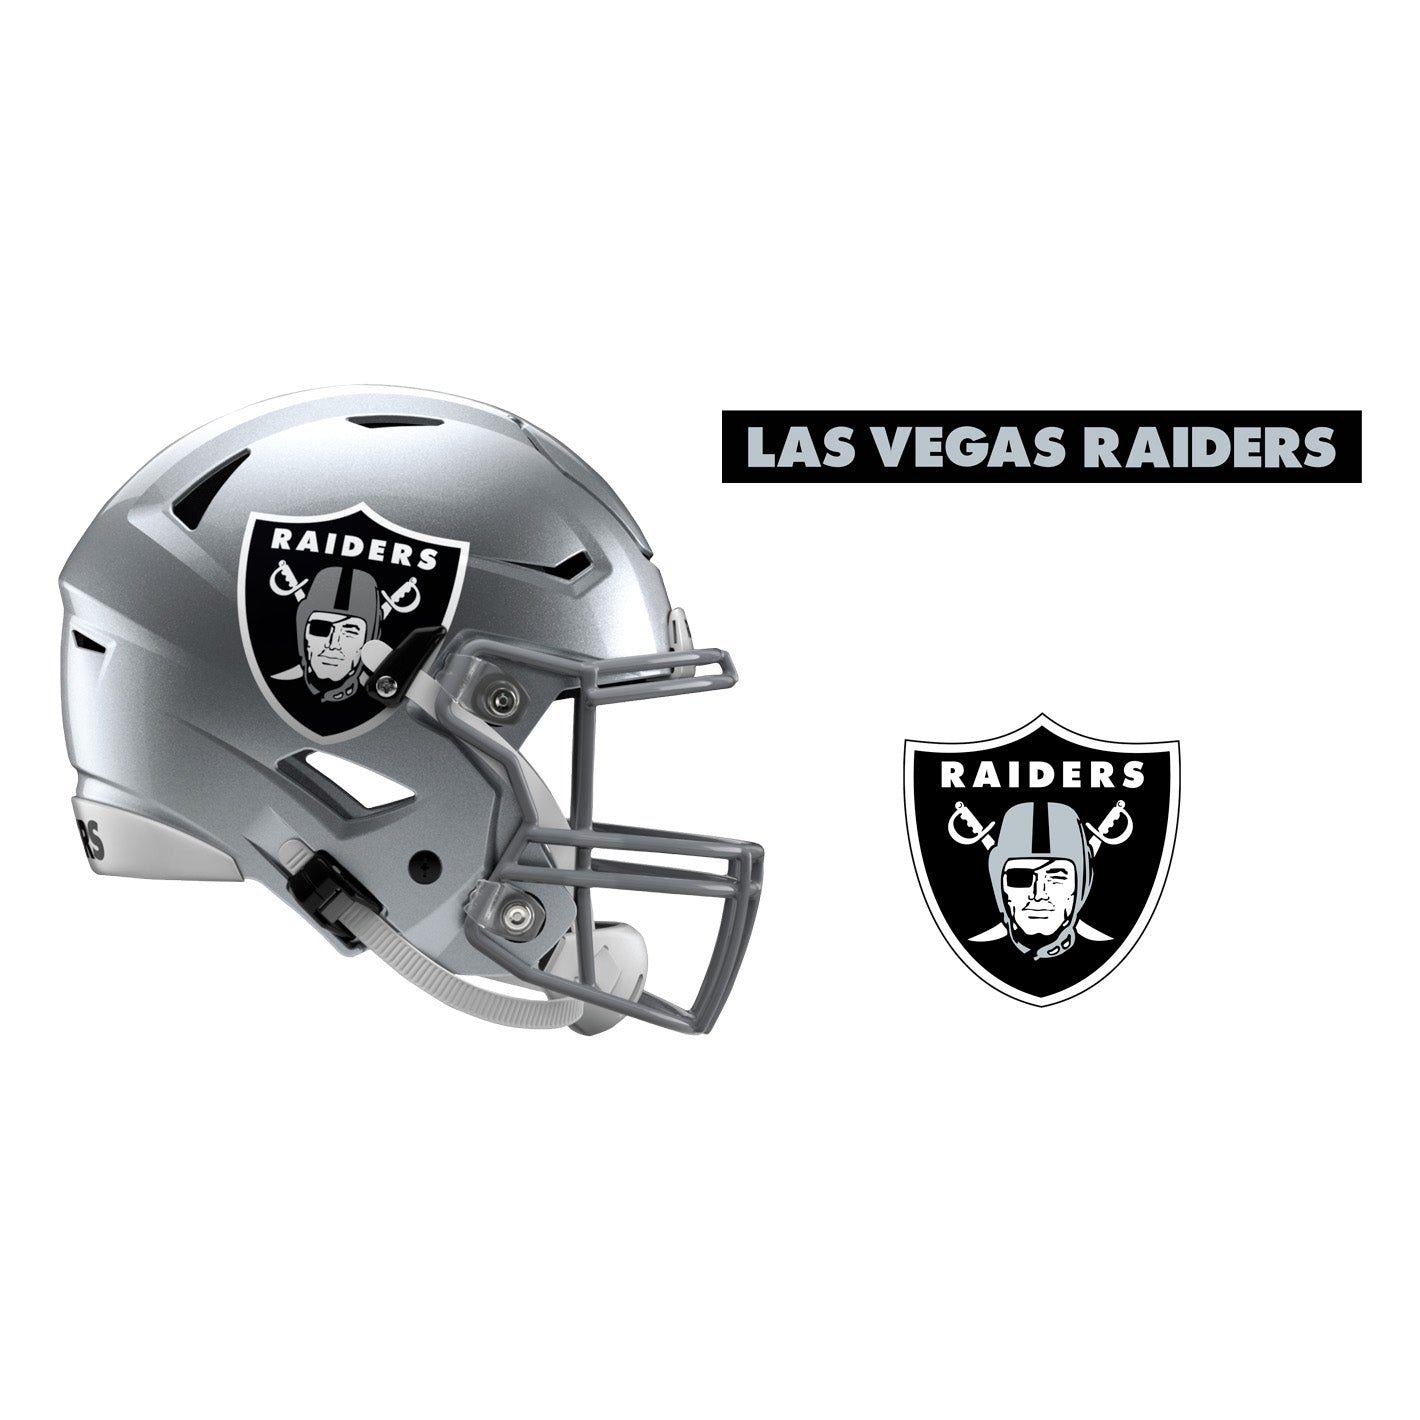 Las Vegas Raiders: 2022 Helmet - Officially Licensed NFL Removable